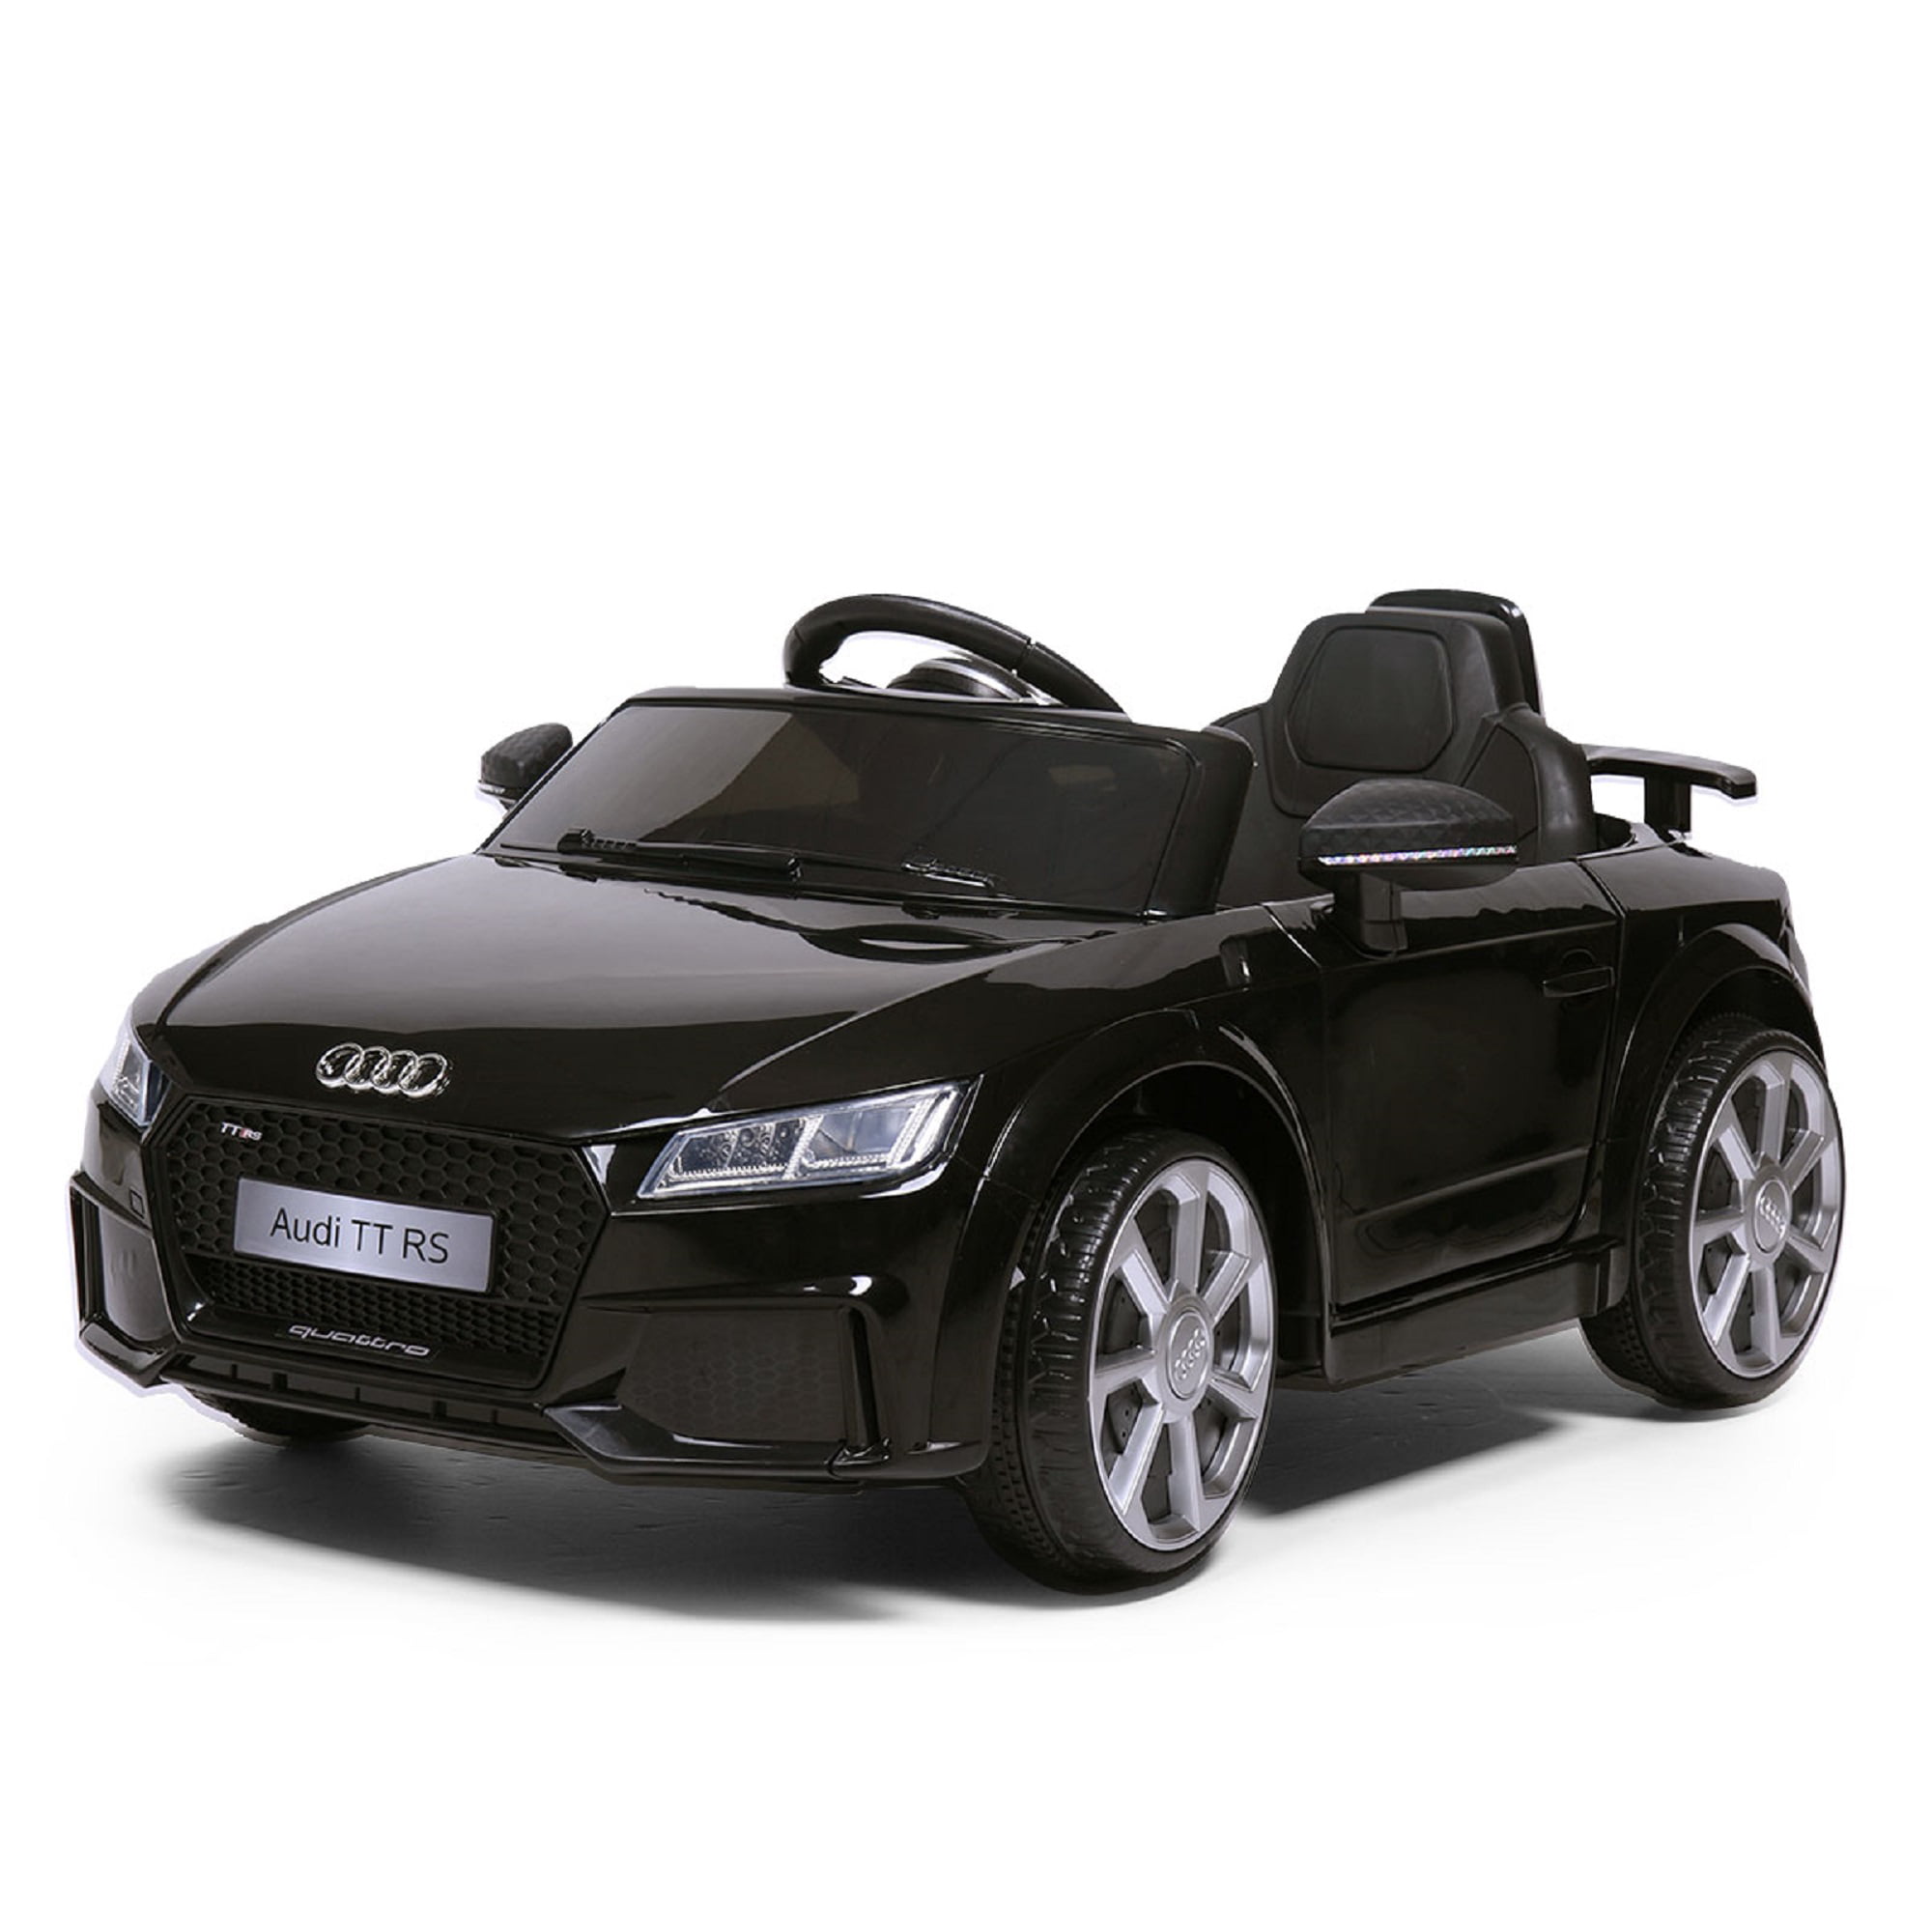 12V Audi TT RS Electric Kids Ride On Car Licensed R/C Remote Control MP3 White 